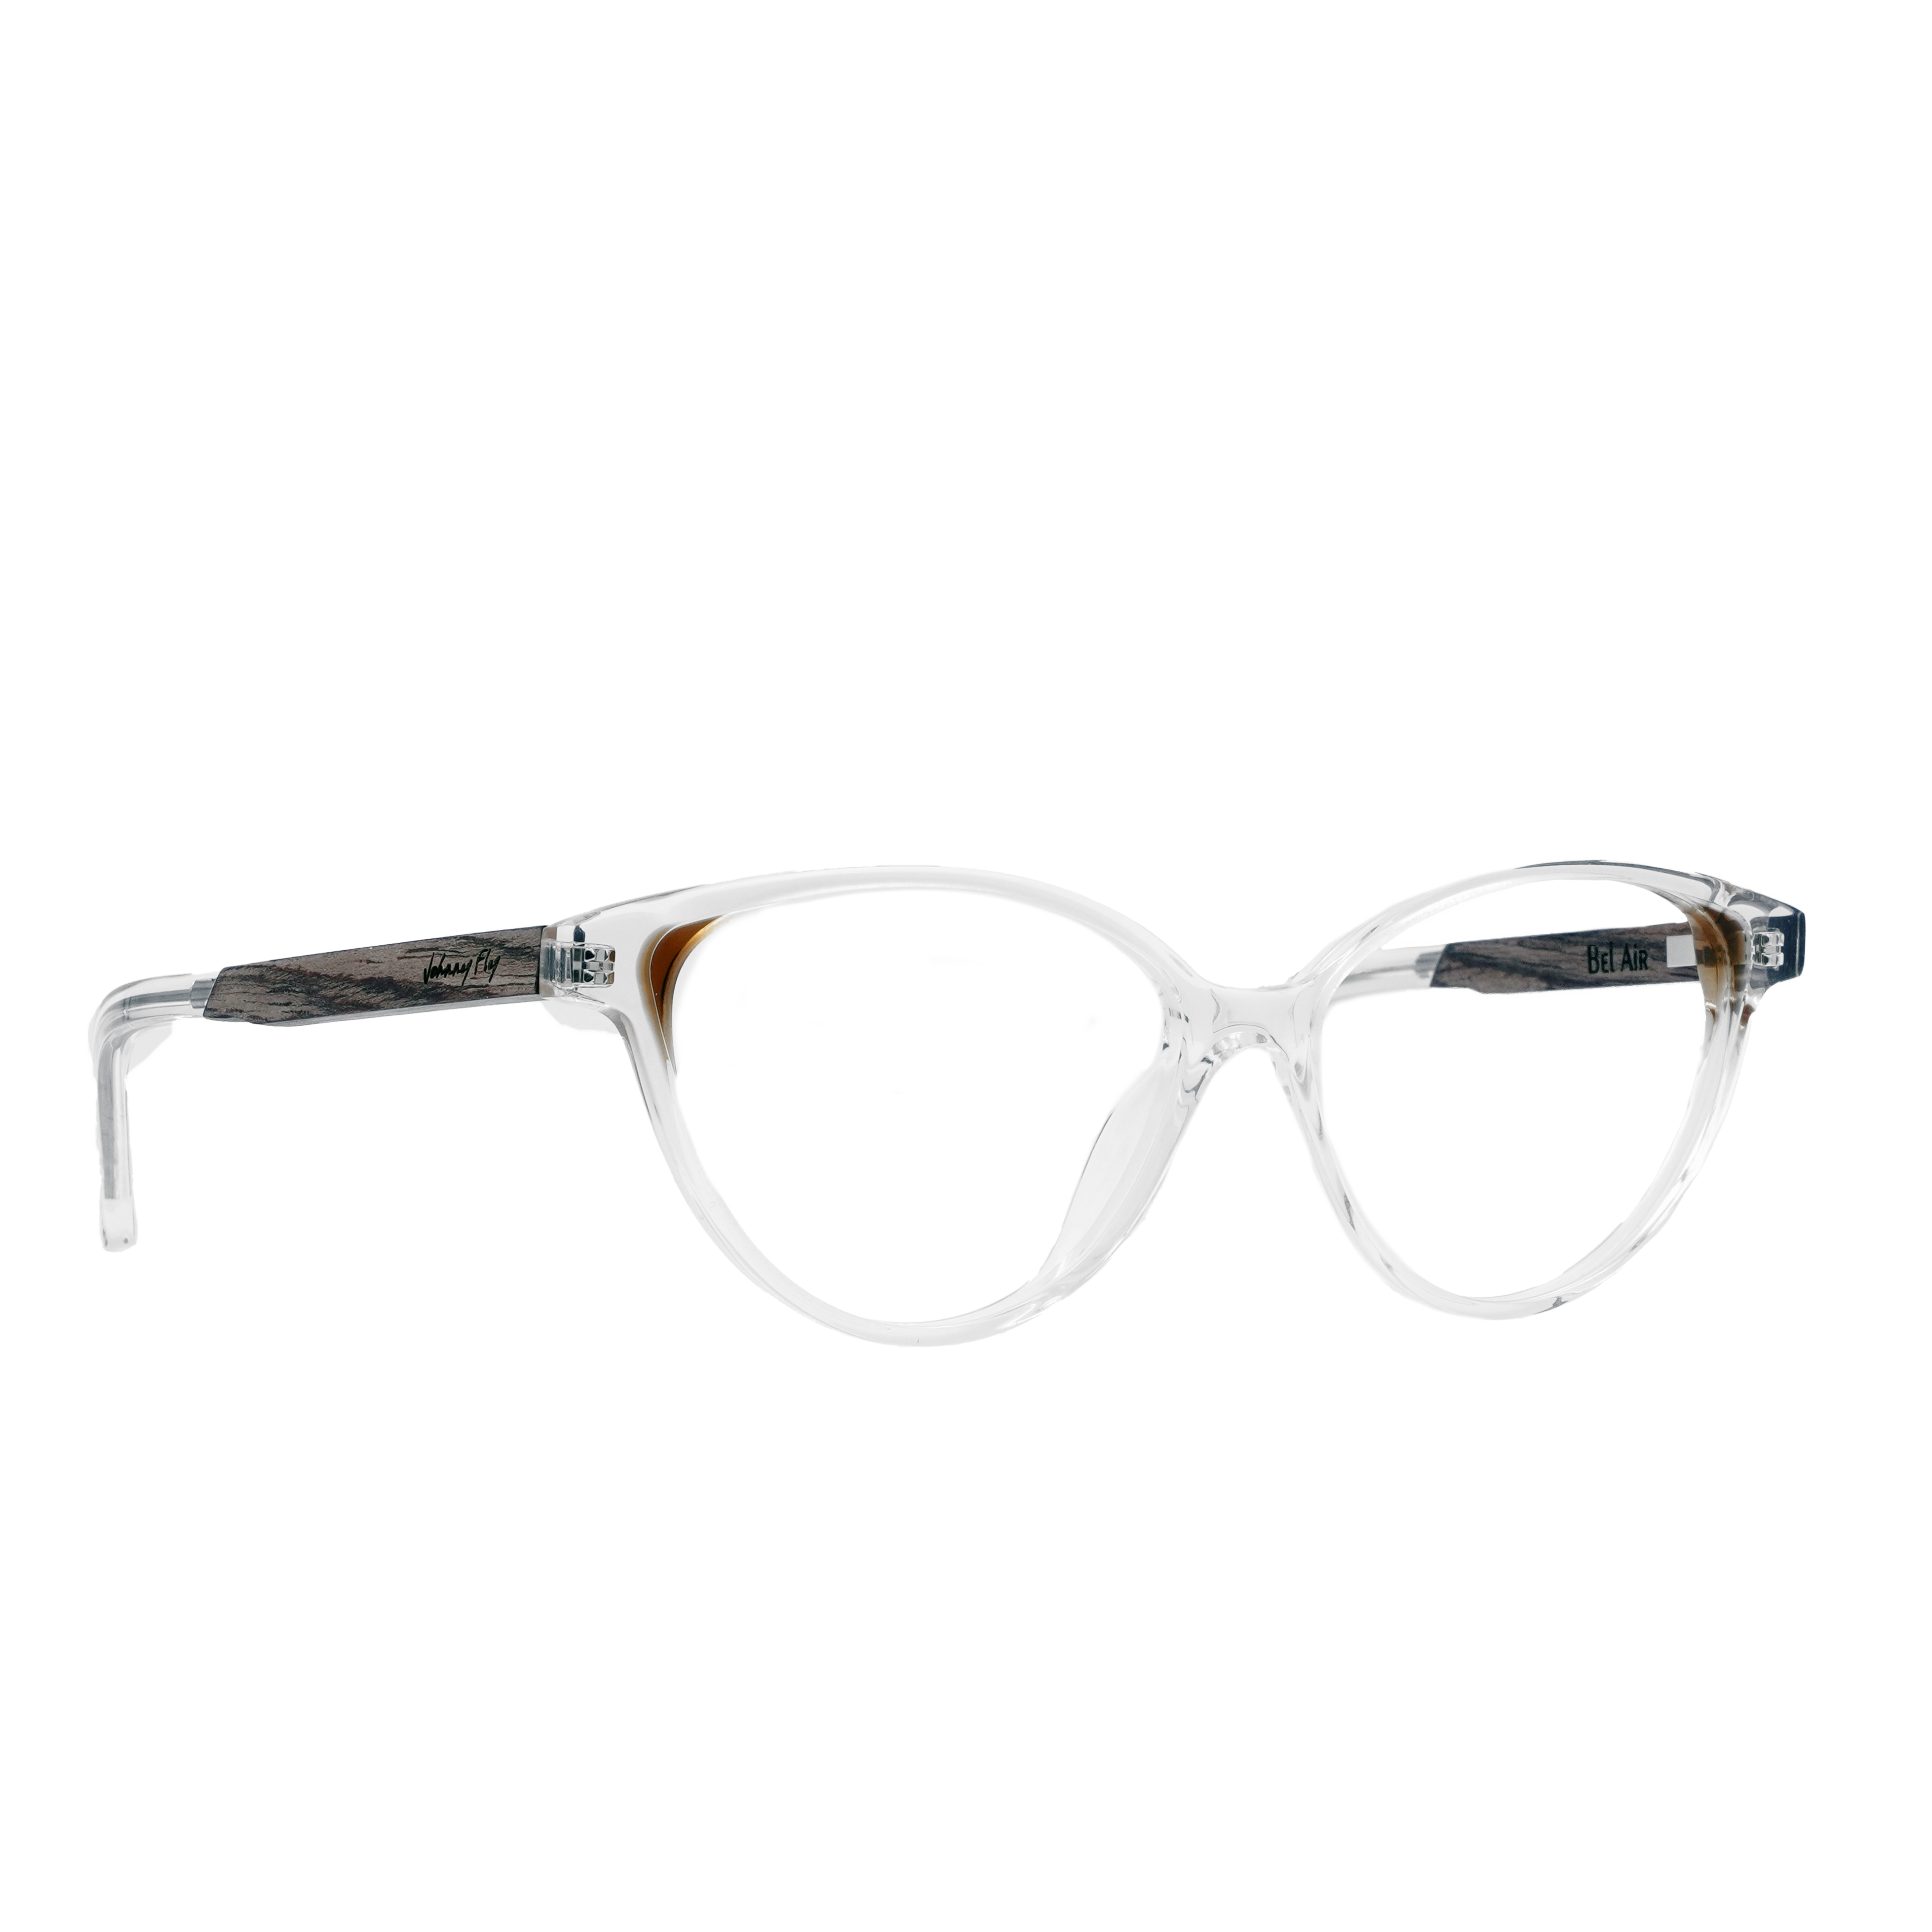 BelAir Eyeglasses by Johnny Fly | 